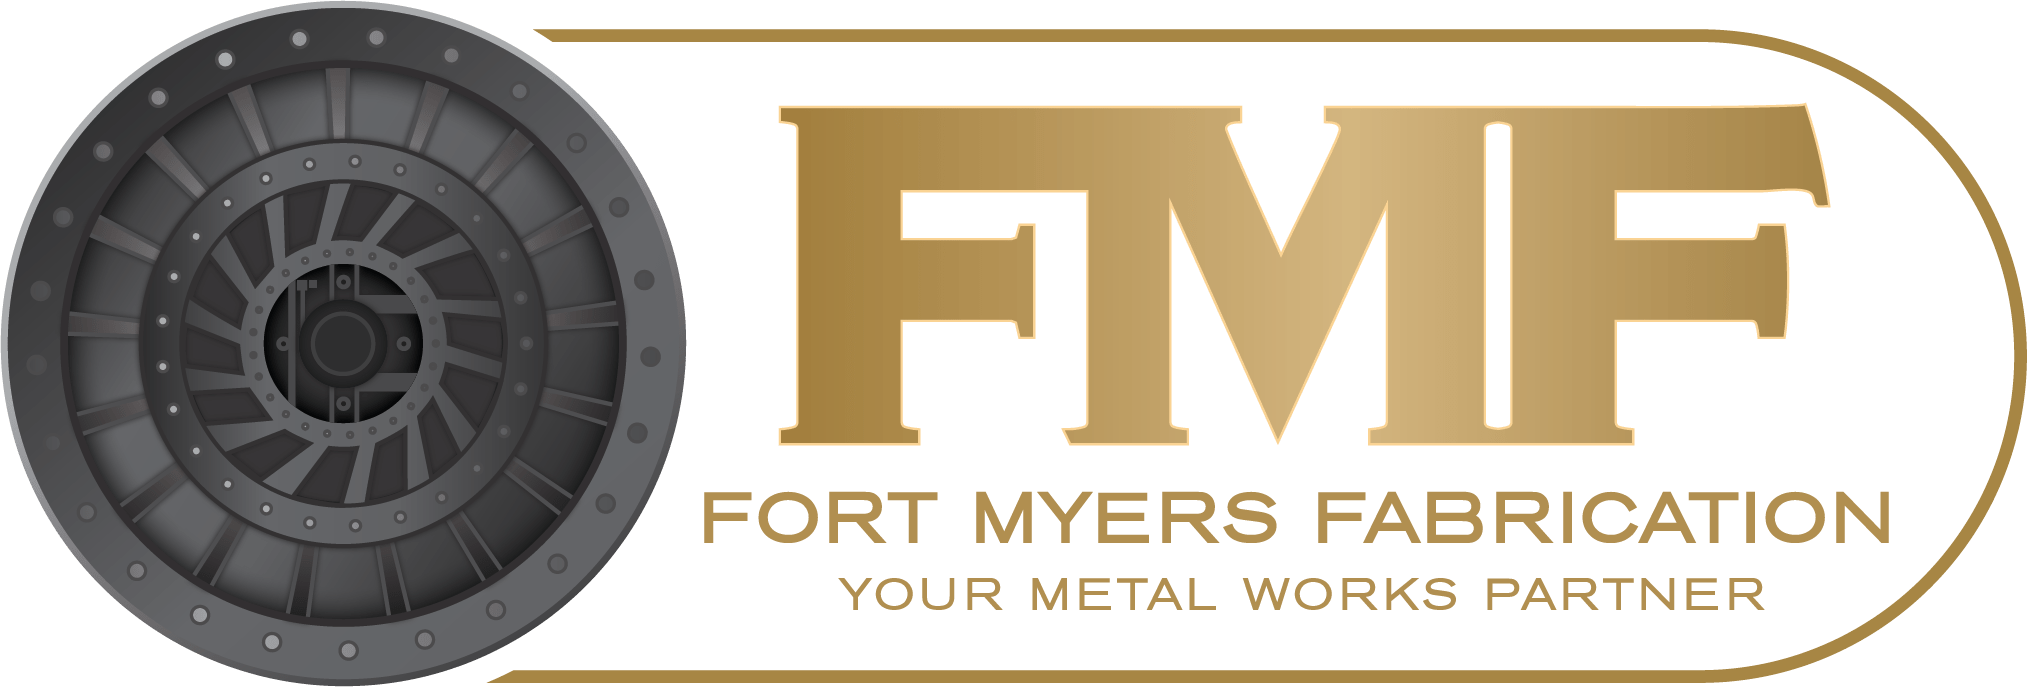 fort-myers-fabrication-logo